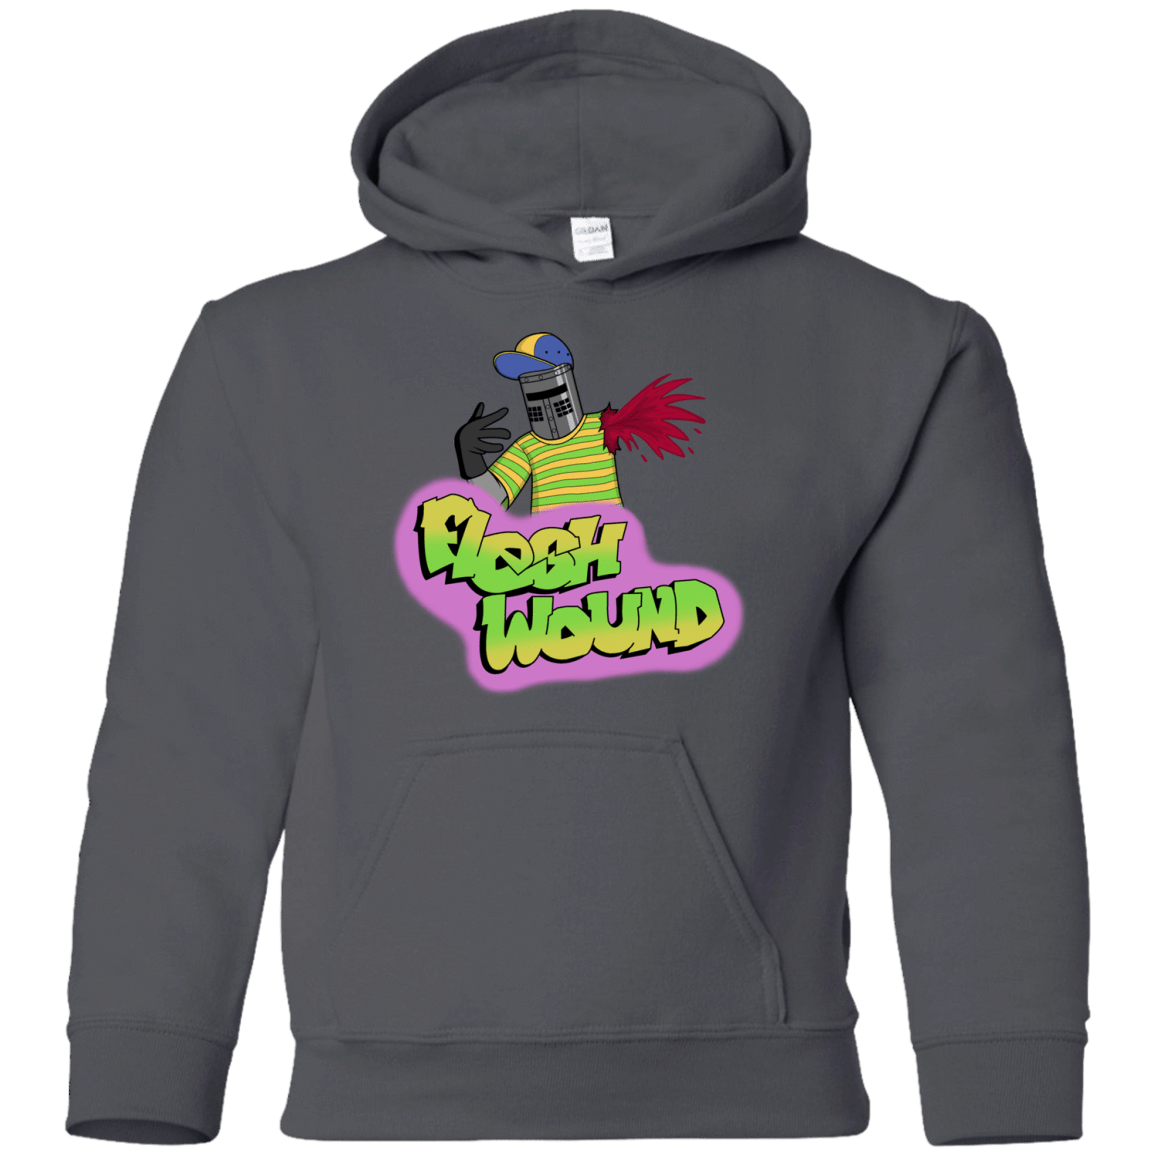 Sweatshirts Charcoal / YS Flesh Wound Youth Hoodie